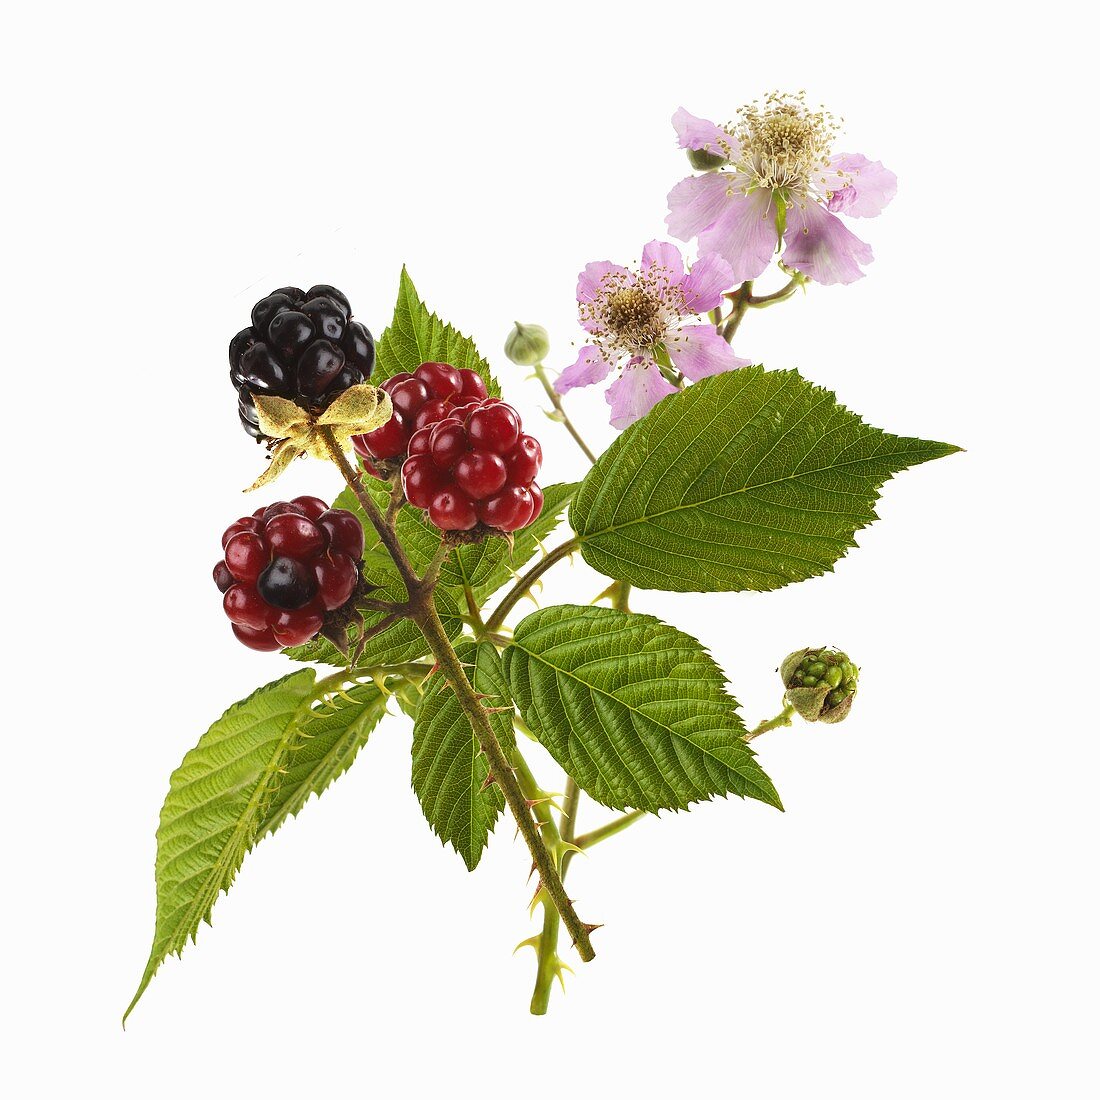 Blackberry stalk with blackberries and flowers